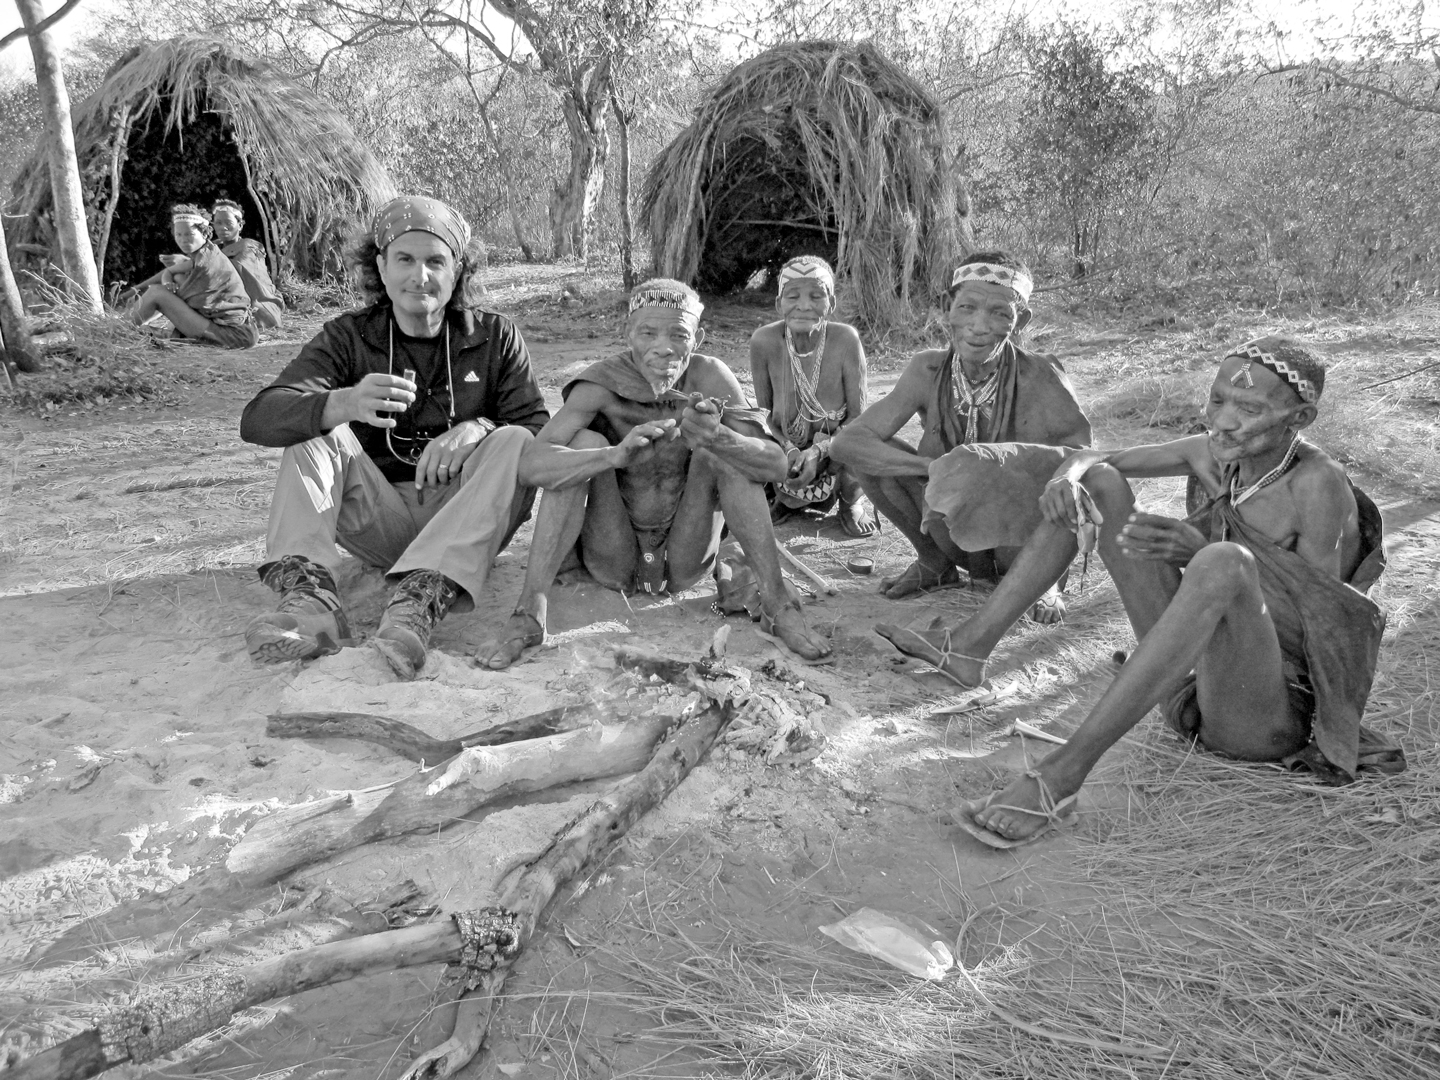 Chris Marino sitting with bush folk in the kalahari